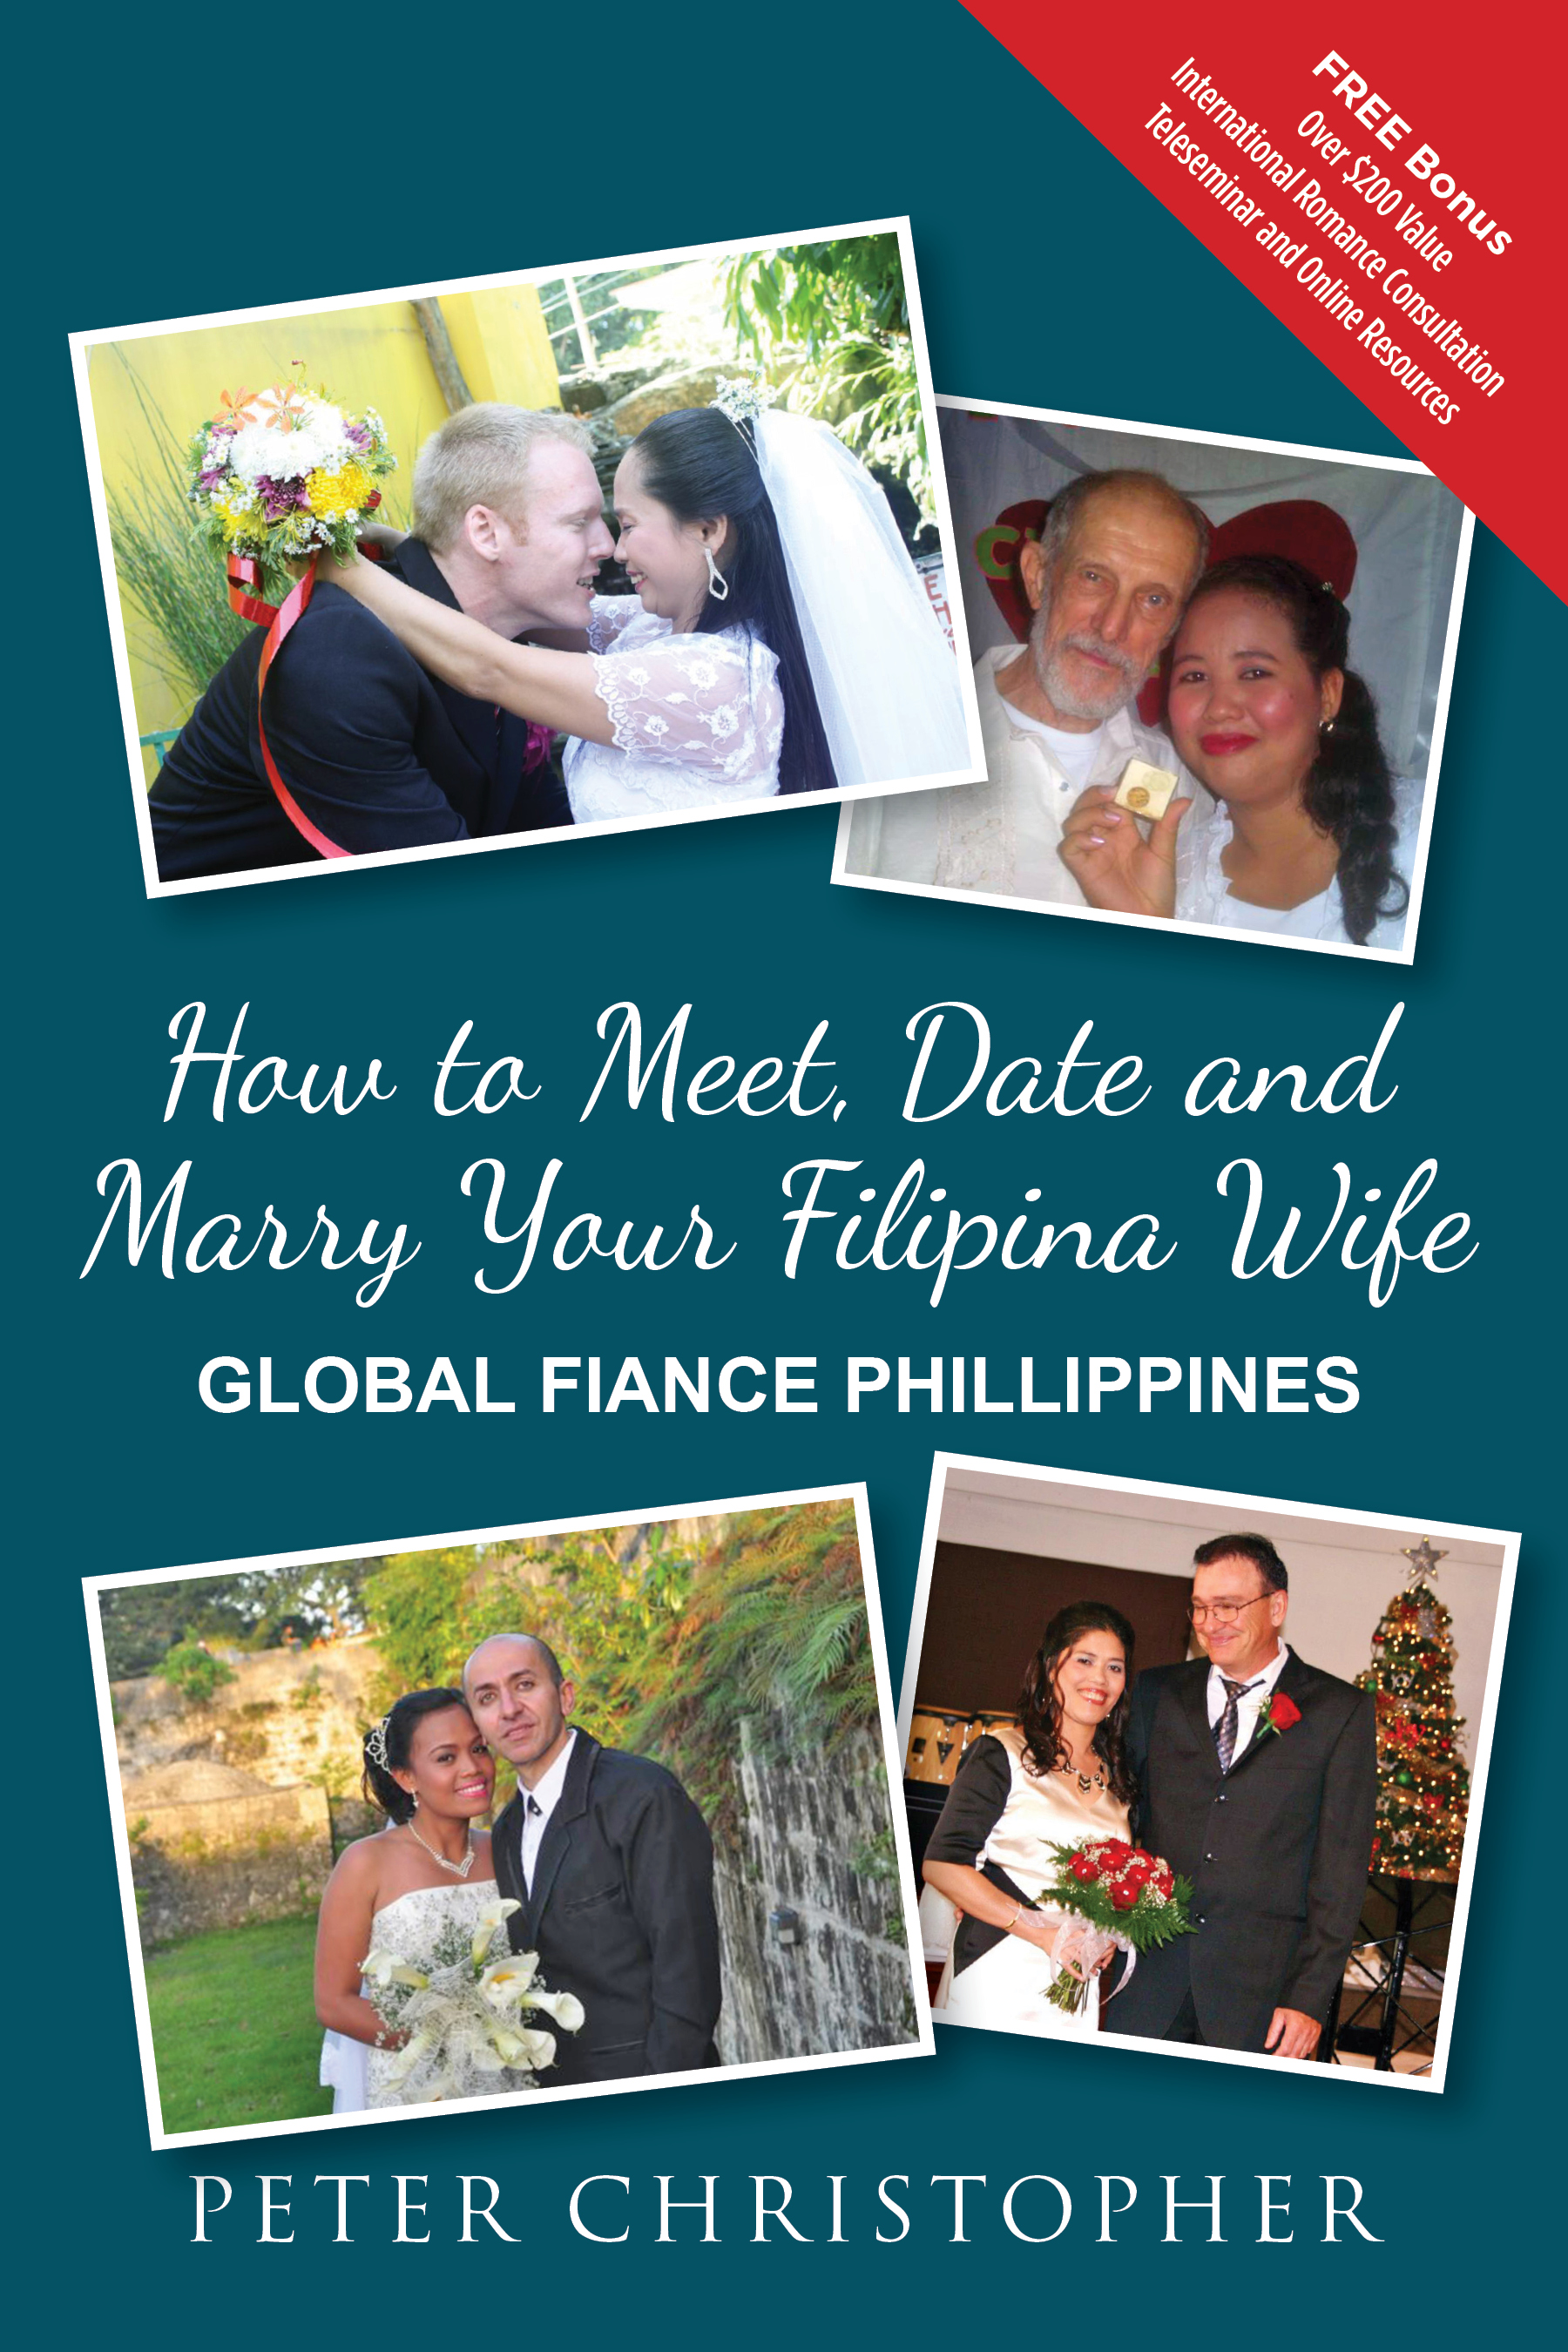 Philippinen christian dating site